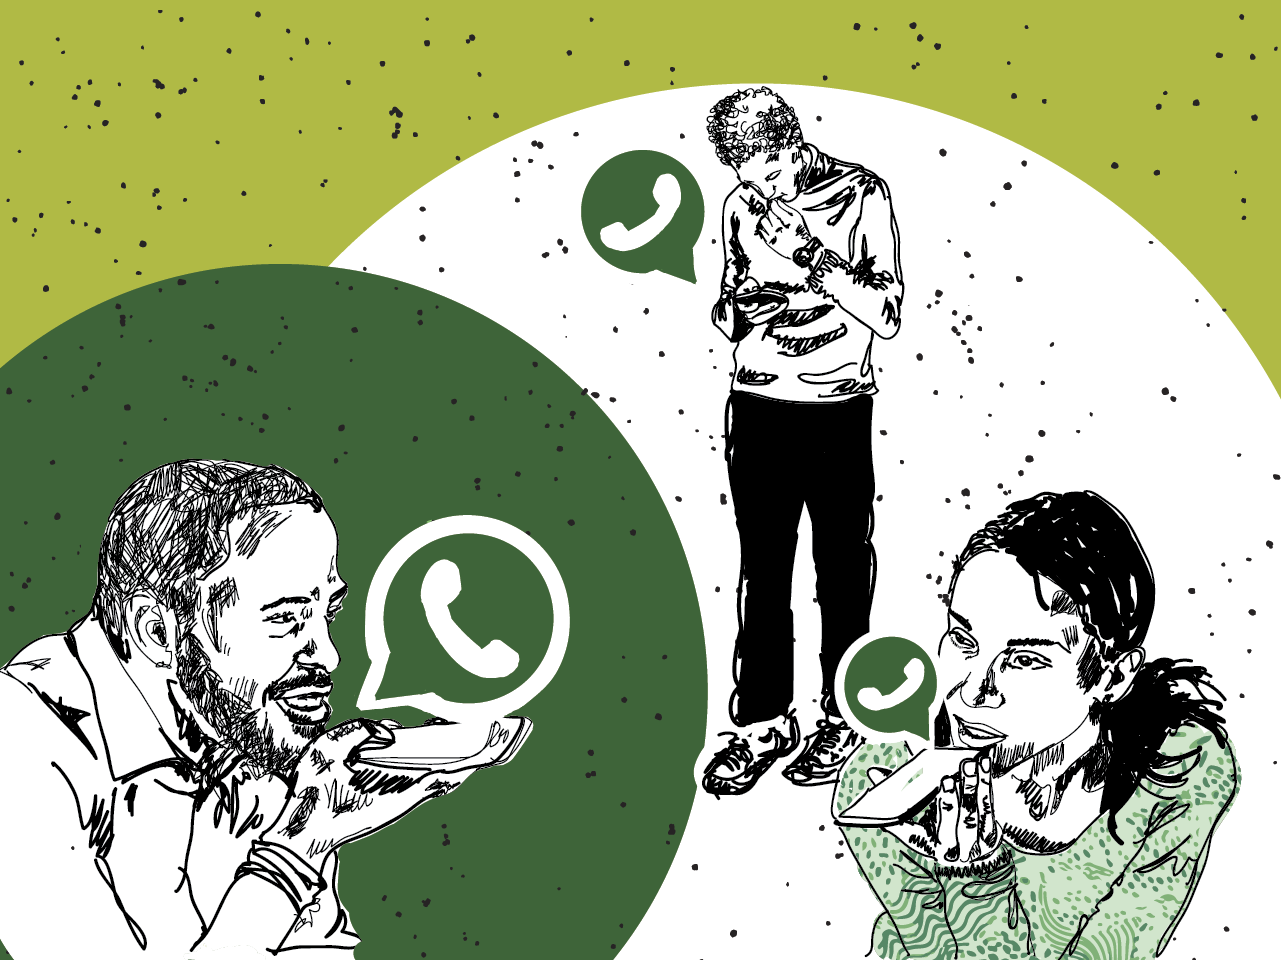 WhatsApp vai à Justiça no Brasil contra disparos em massa